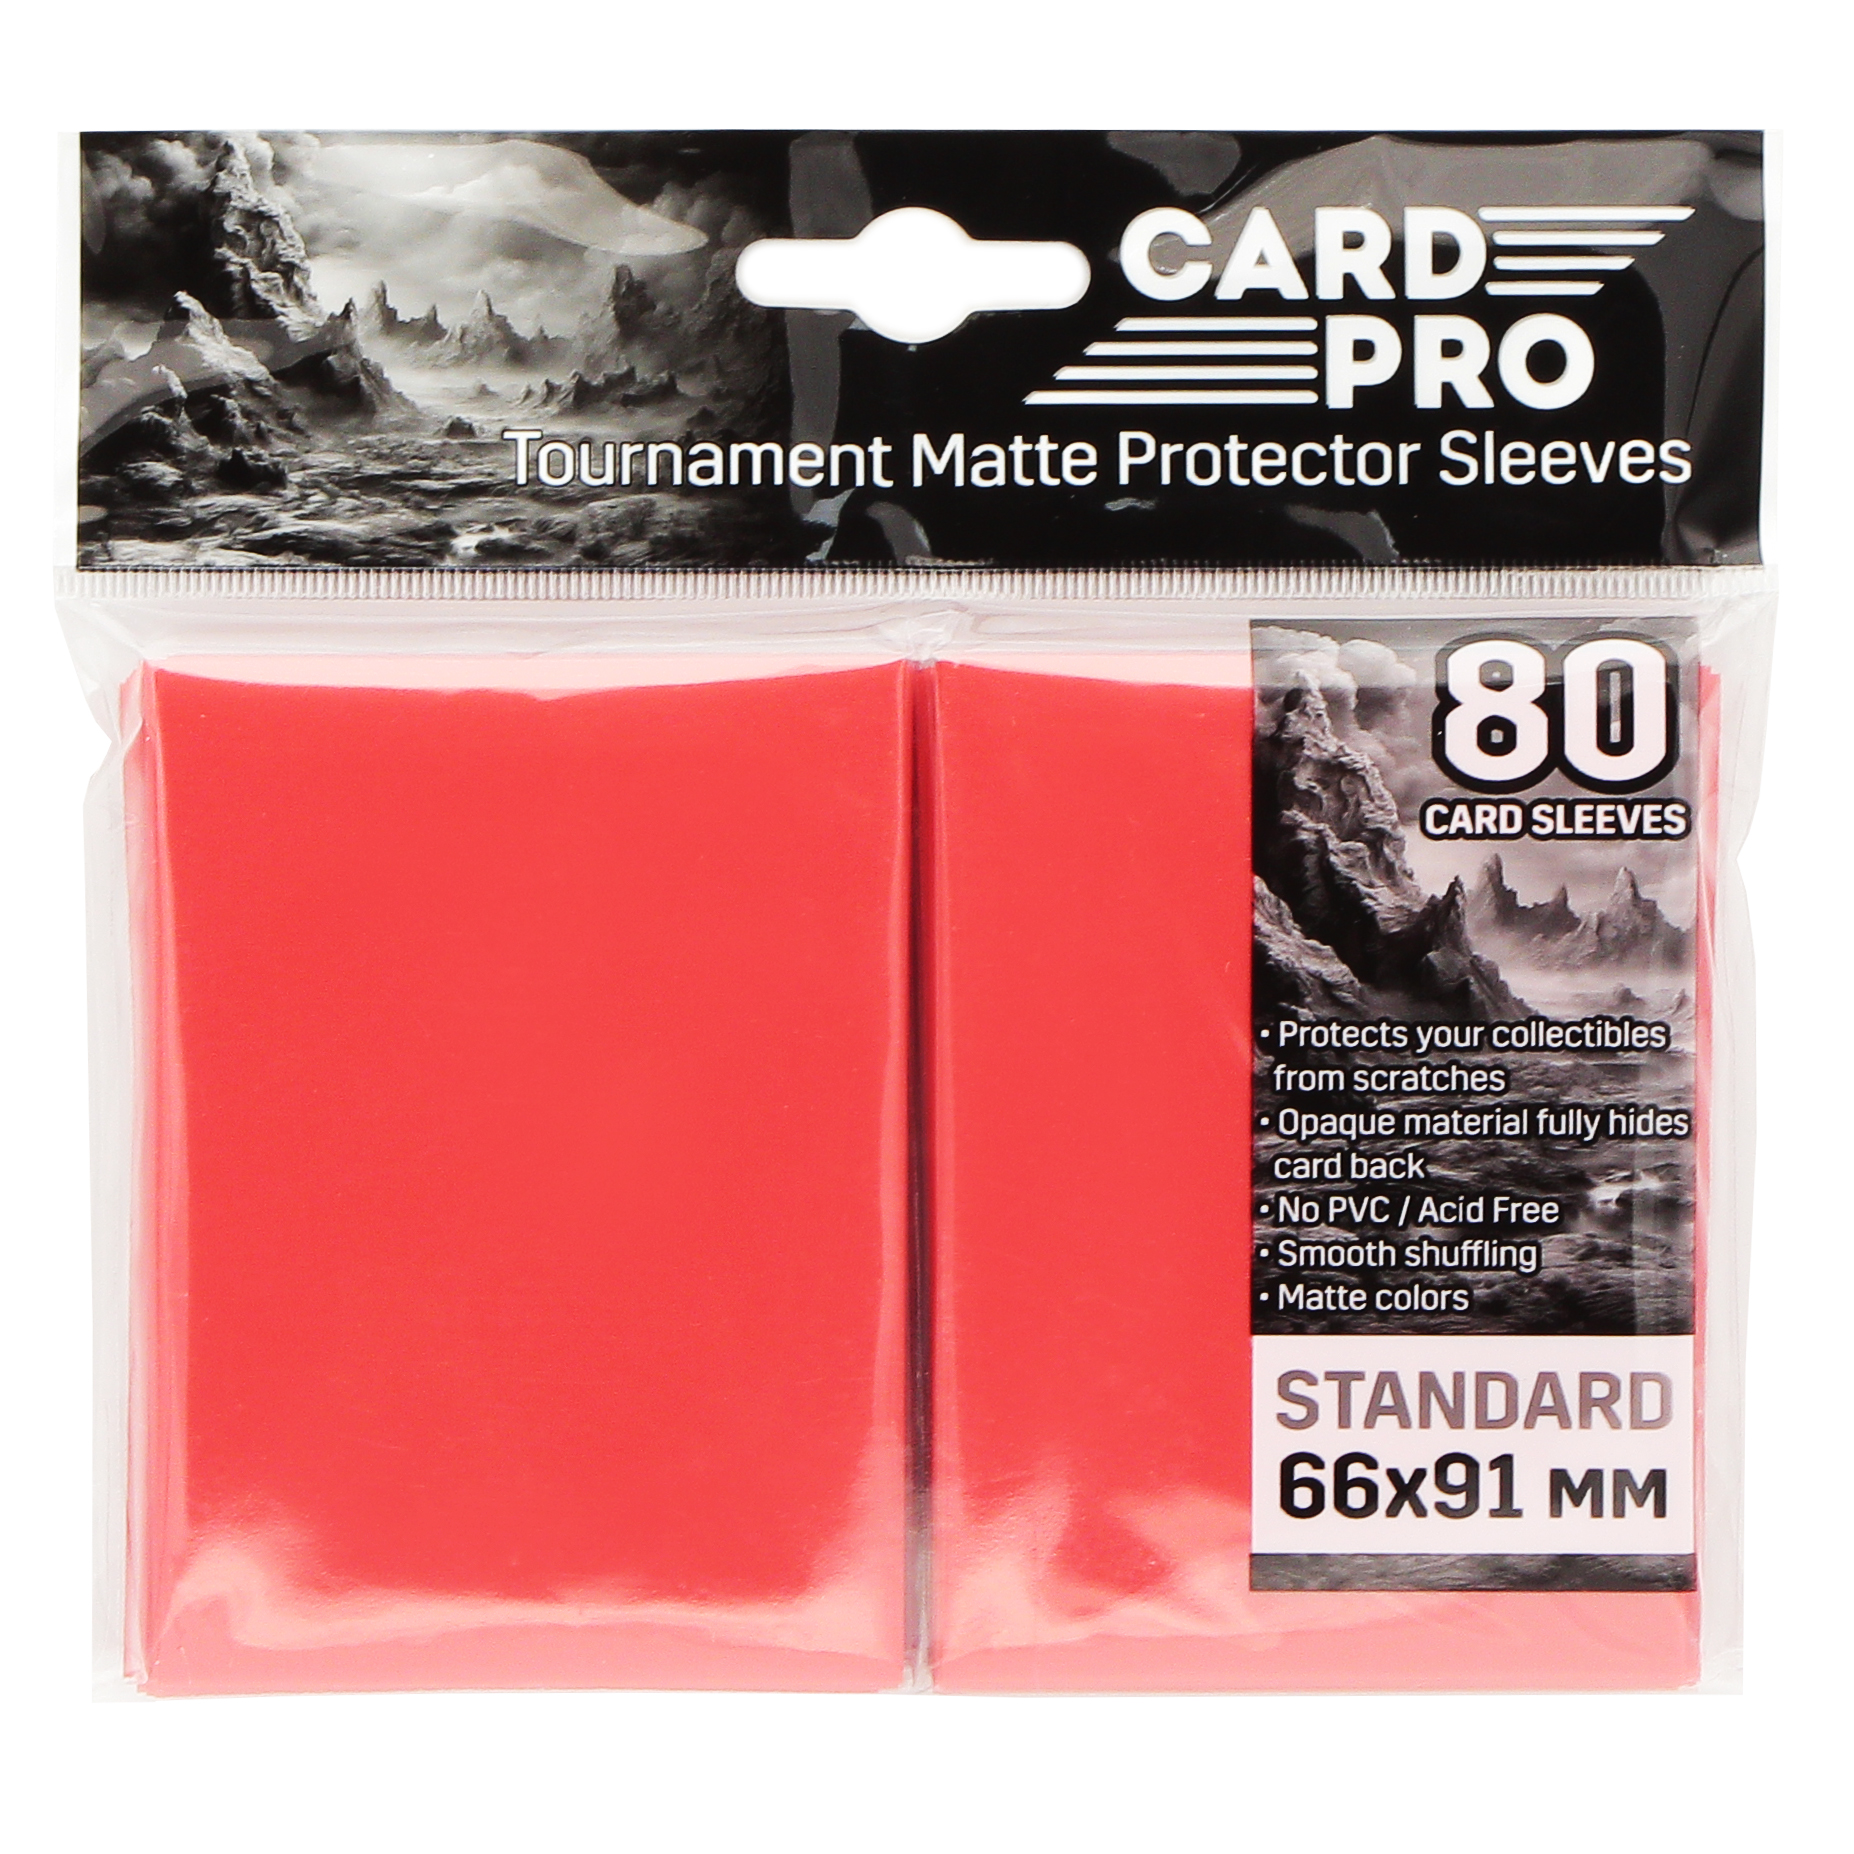 Протекторы для ККИ Card-Pro красные 66x91 мм, 80 шт. datong world car key shell case for peugeot 2008 3008 5008 citroen c4 c5 x7 c4l c6 c3 xr ds4 ds5 ds60 smart card housing cover